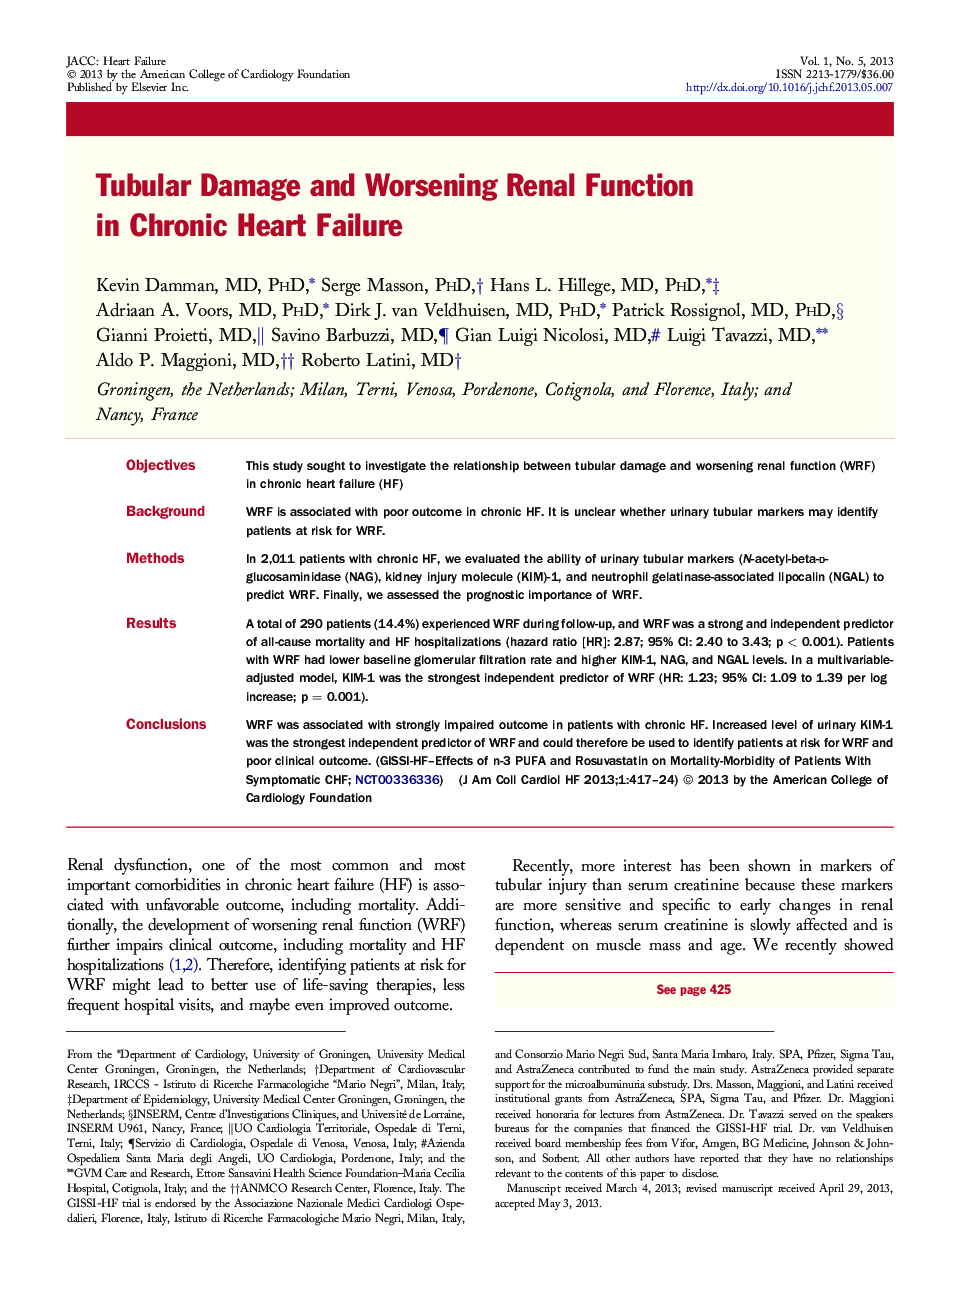 Tubular Damage and Worsening Renal Function in Chronic Heart Failure 